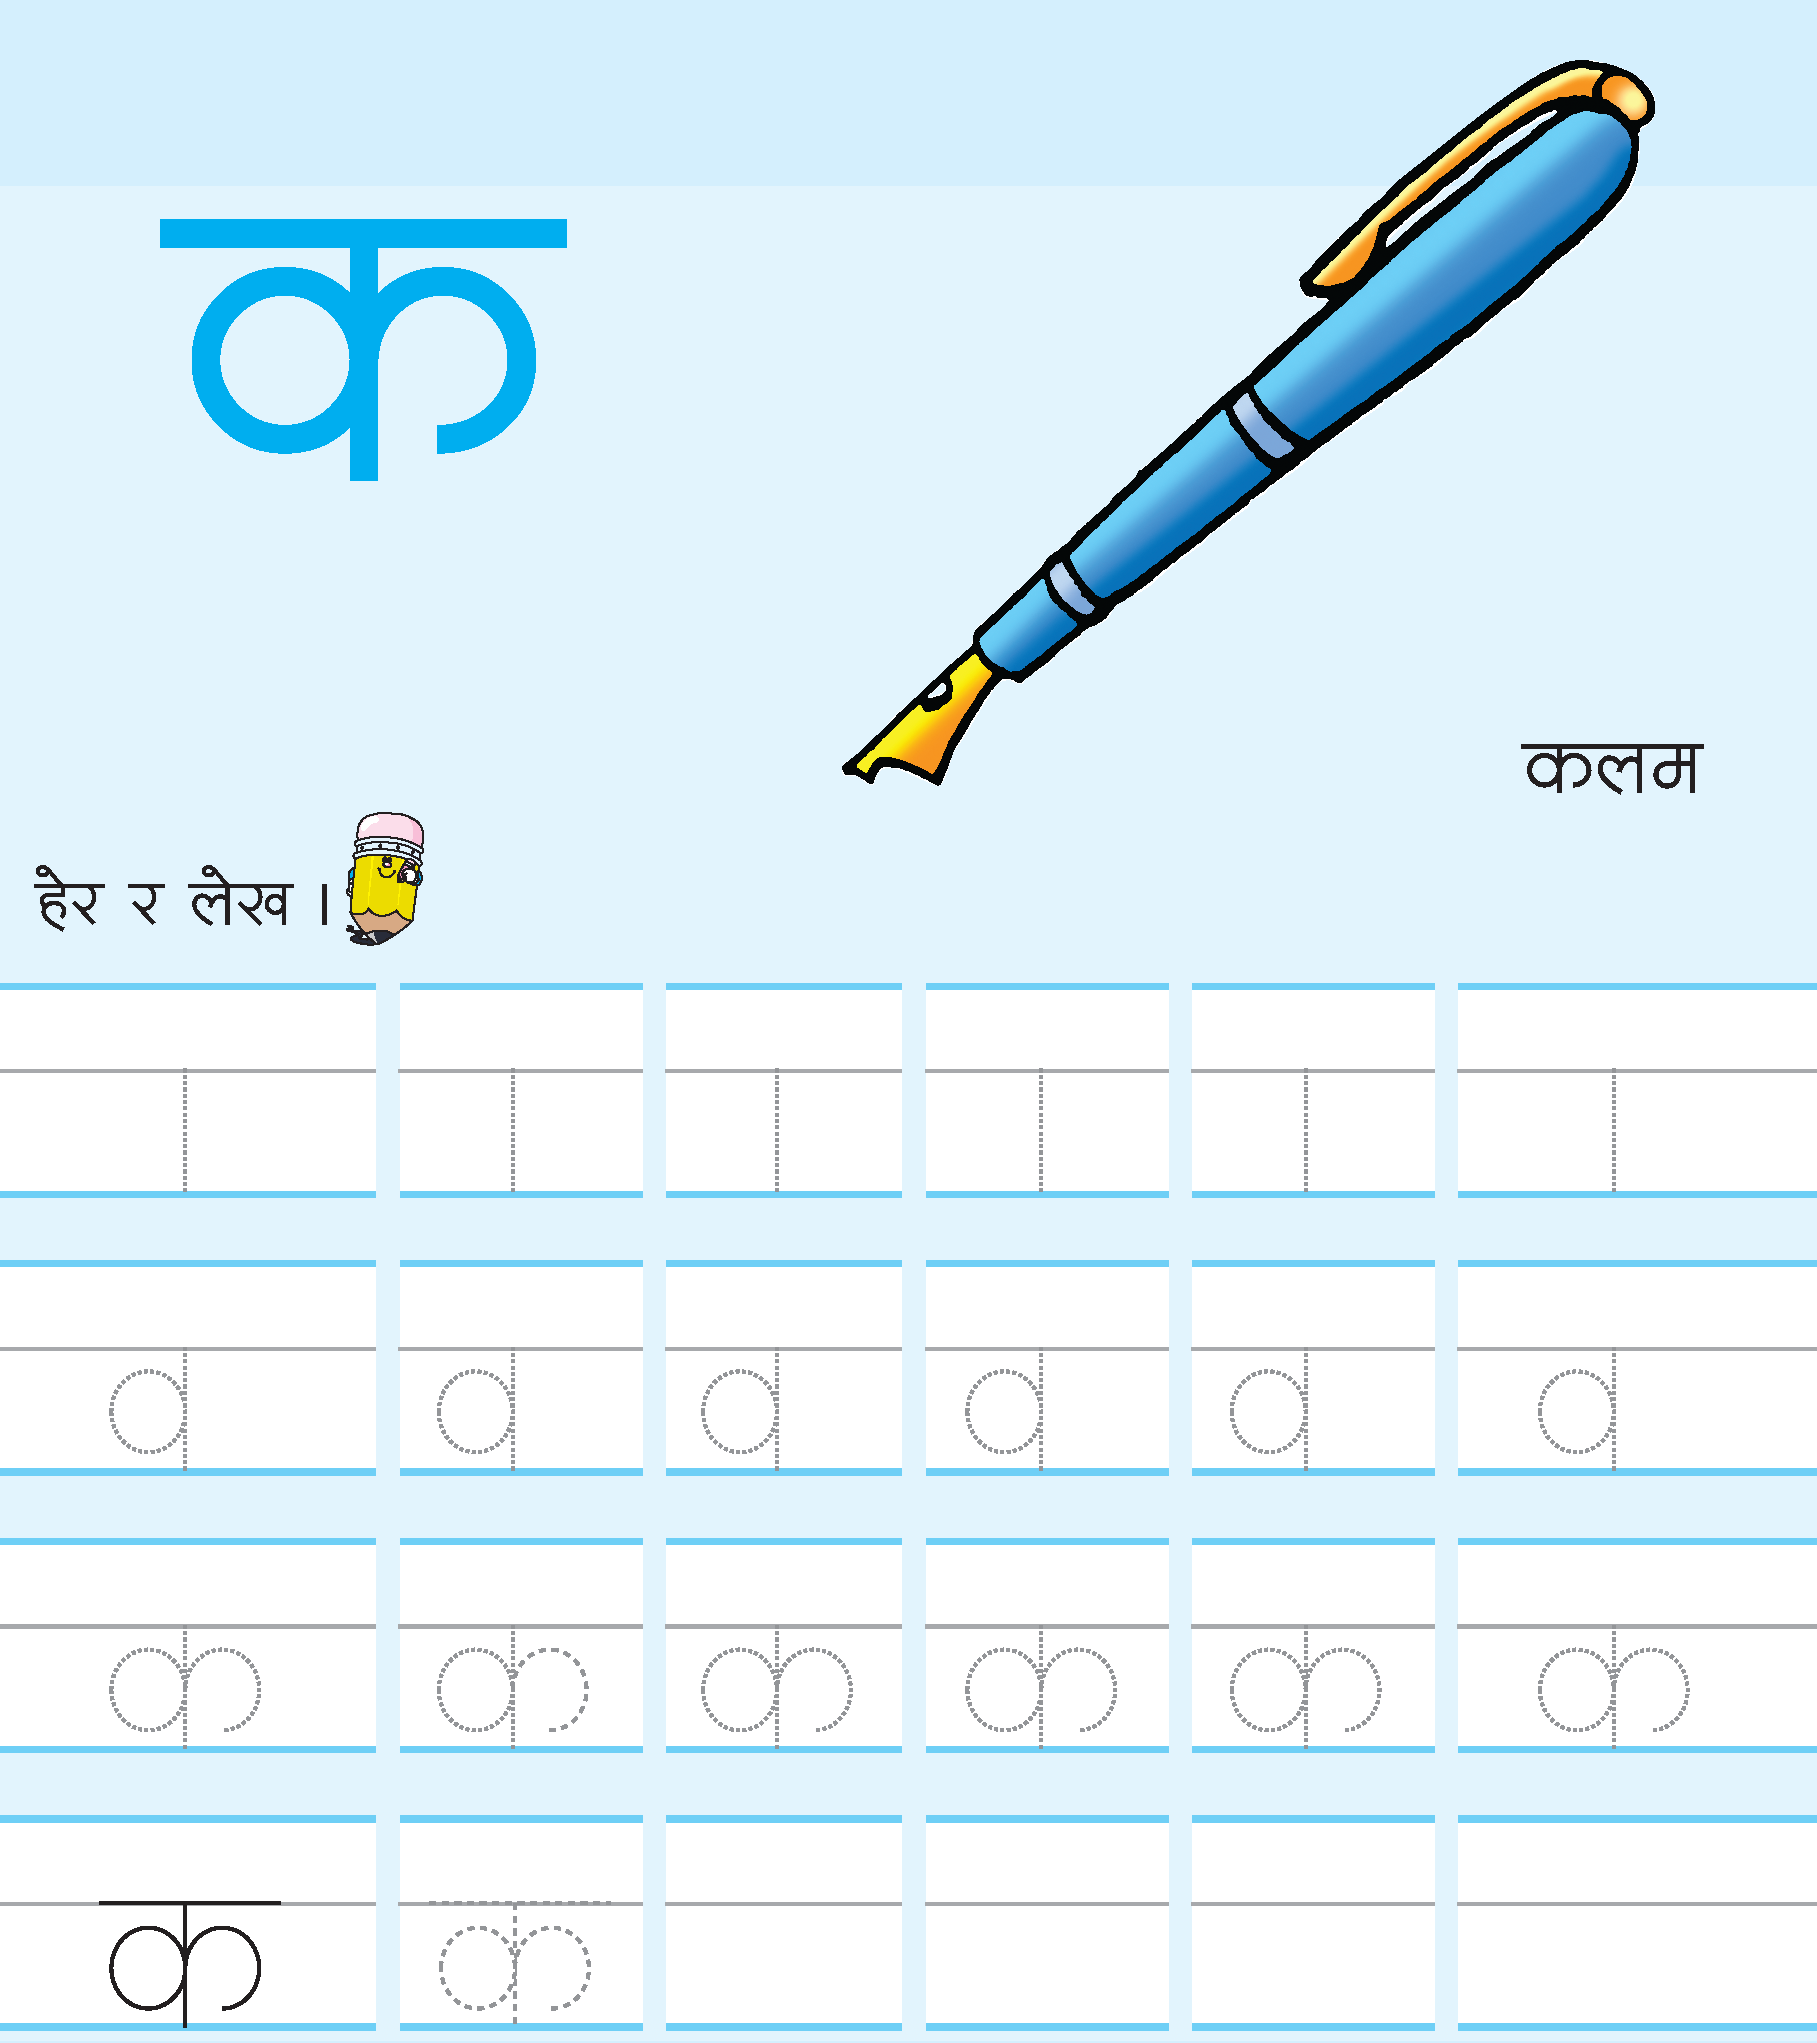 nepali-alphabet-worksheet-free-download-gambr-co